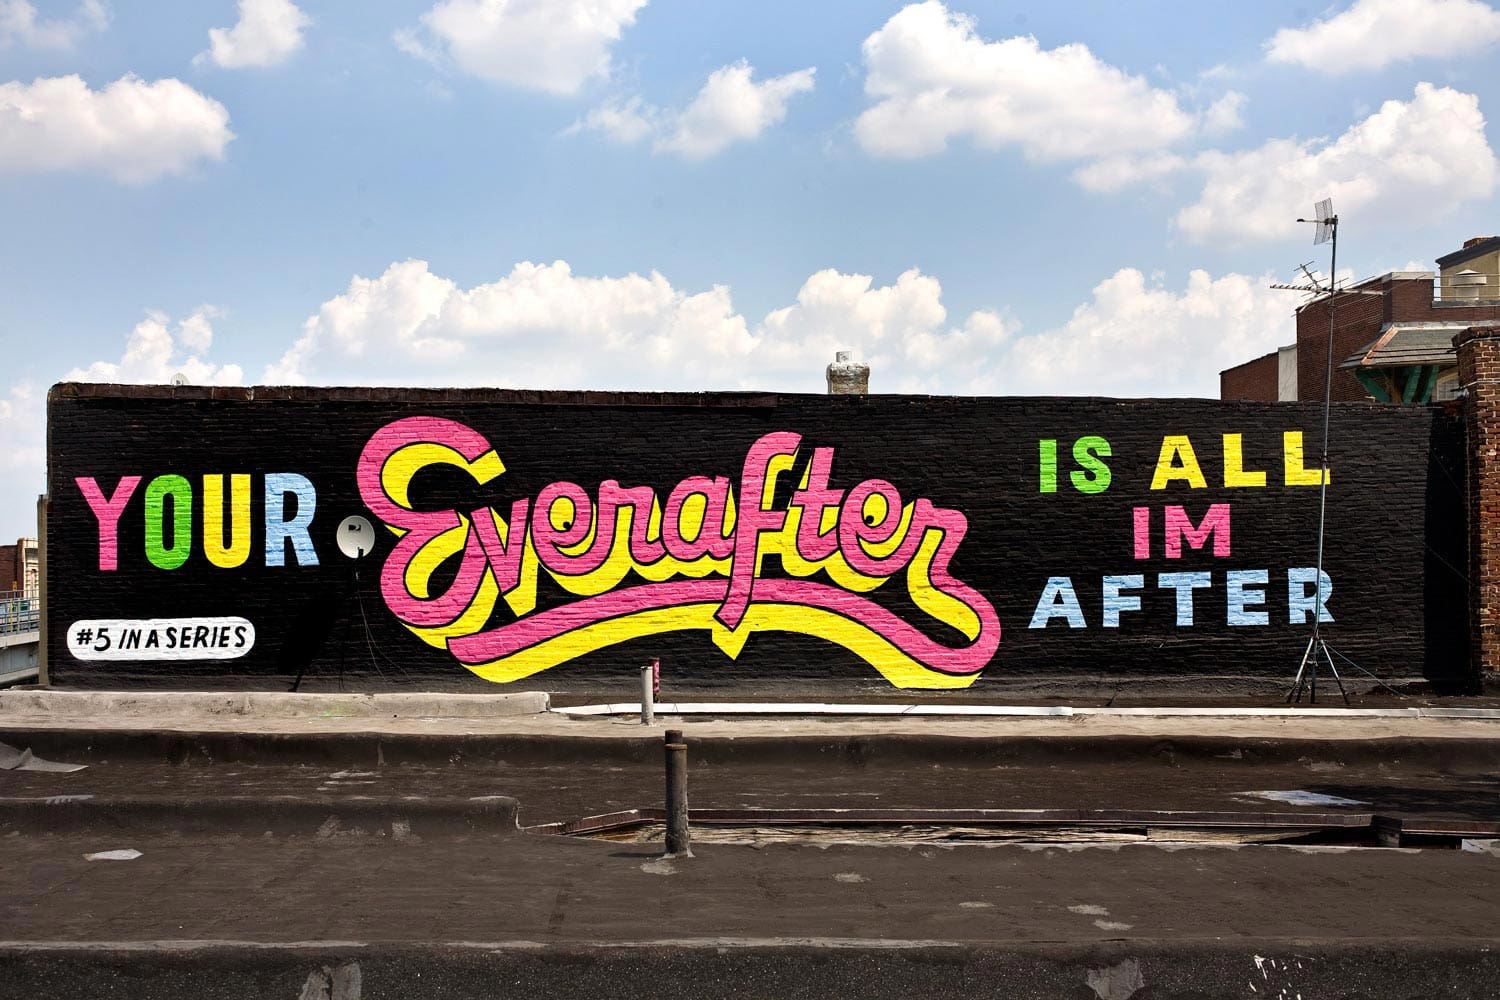 Stephen Powers, Everafter, A Love Letter For You, City of Philadelphia Mural Arts Program